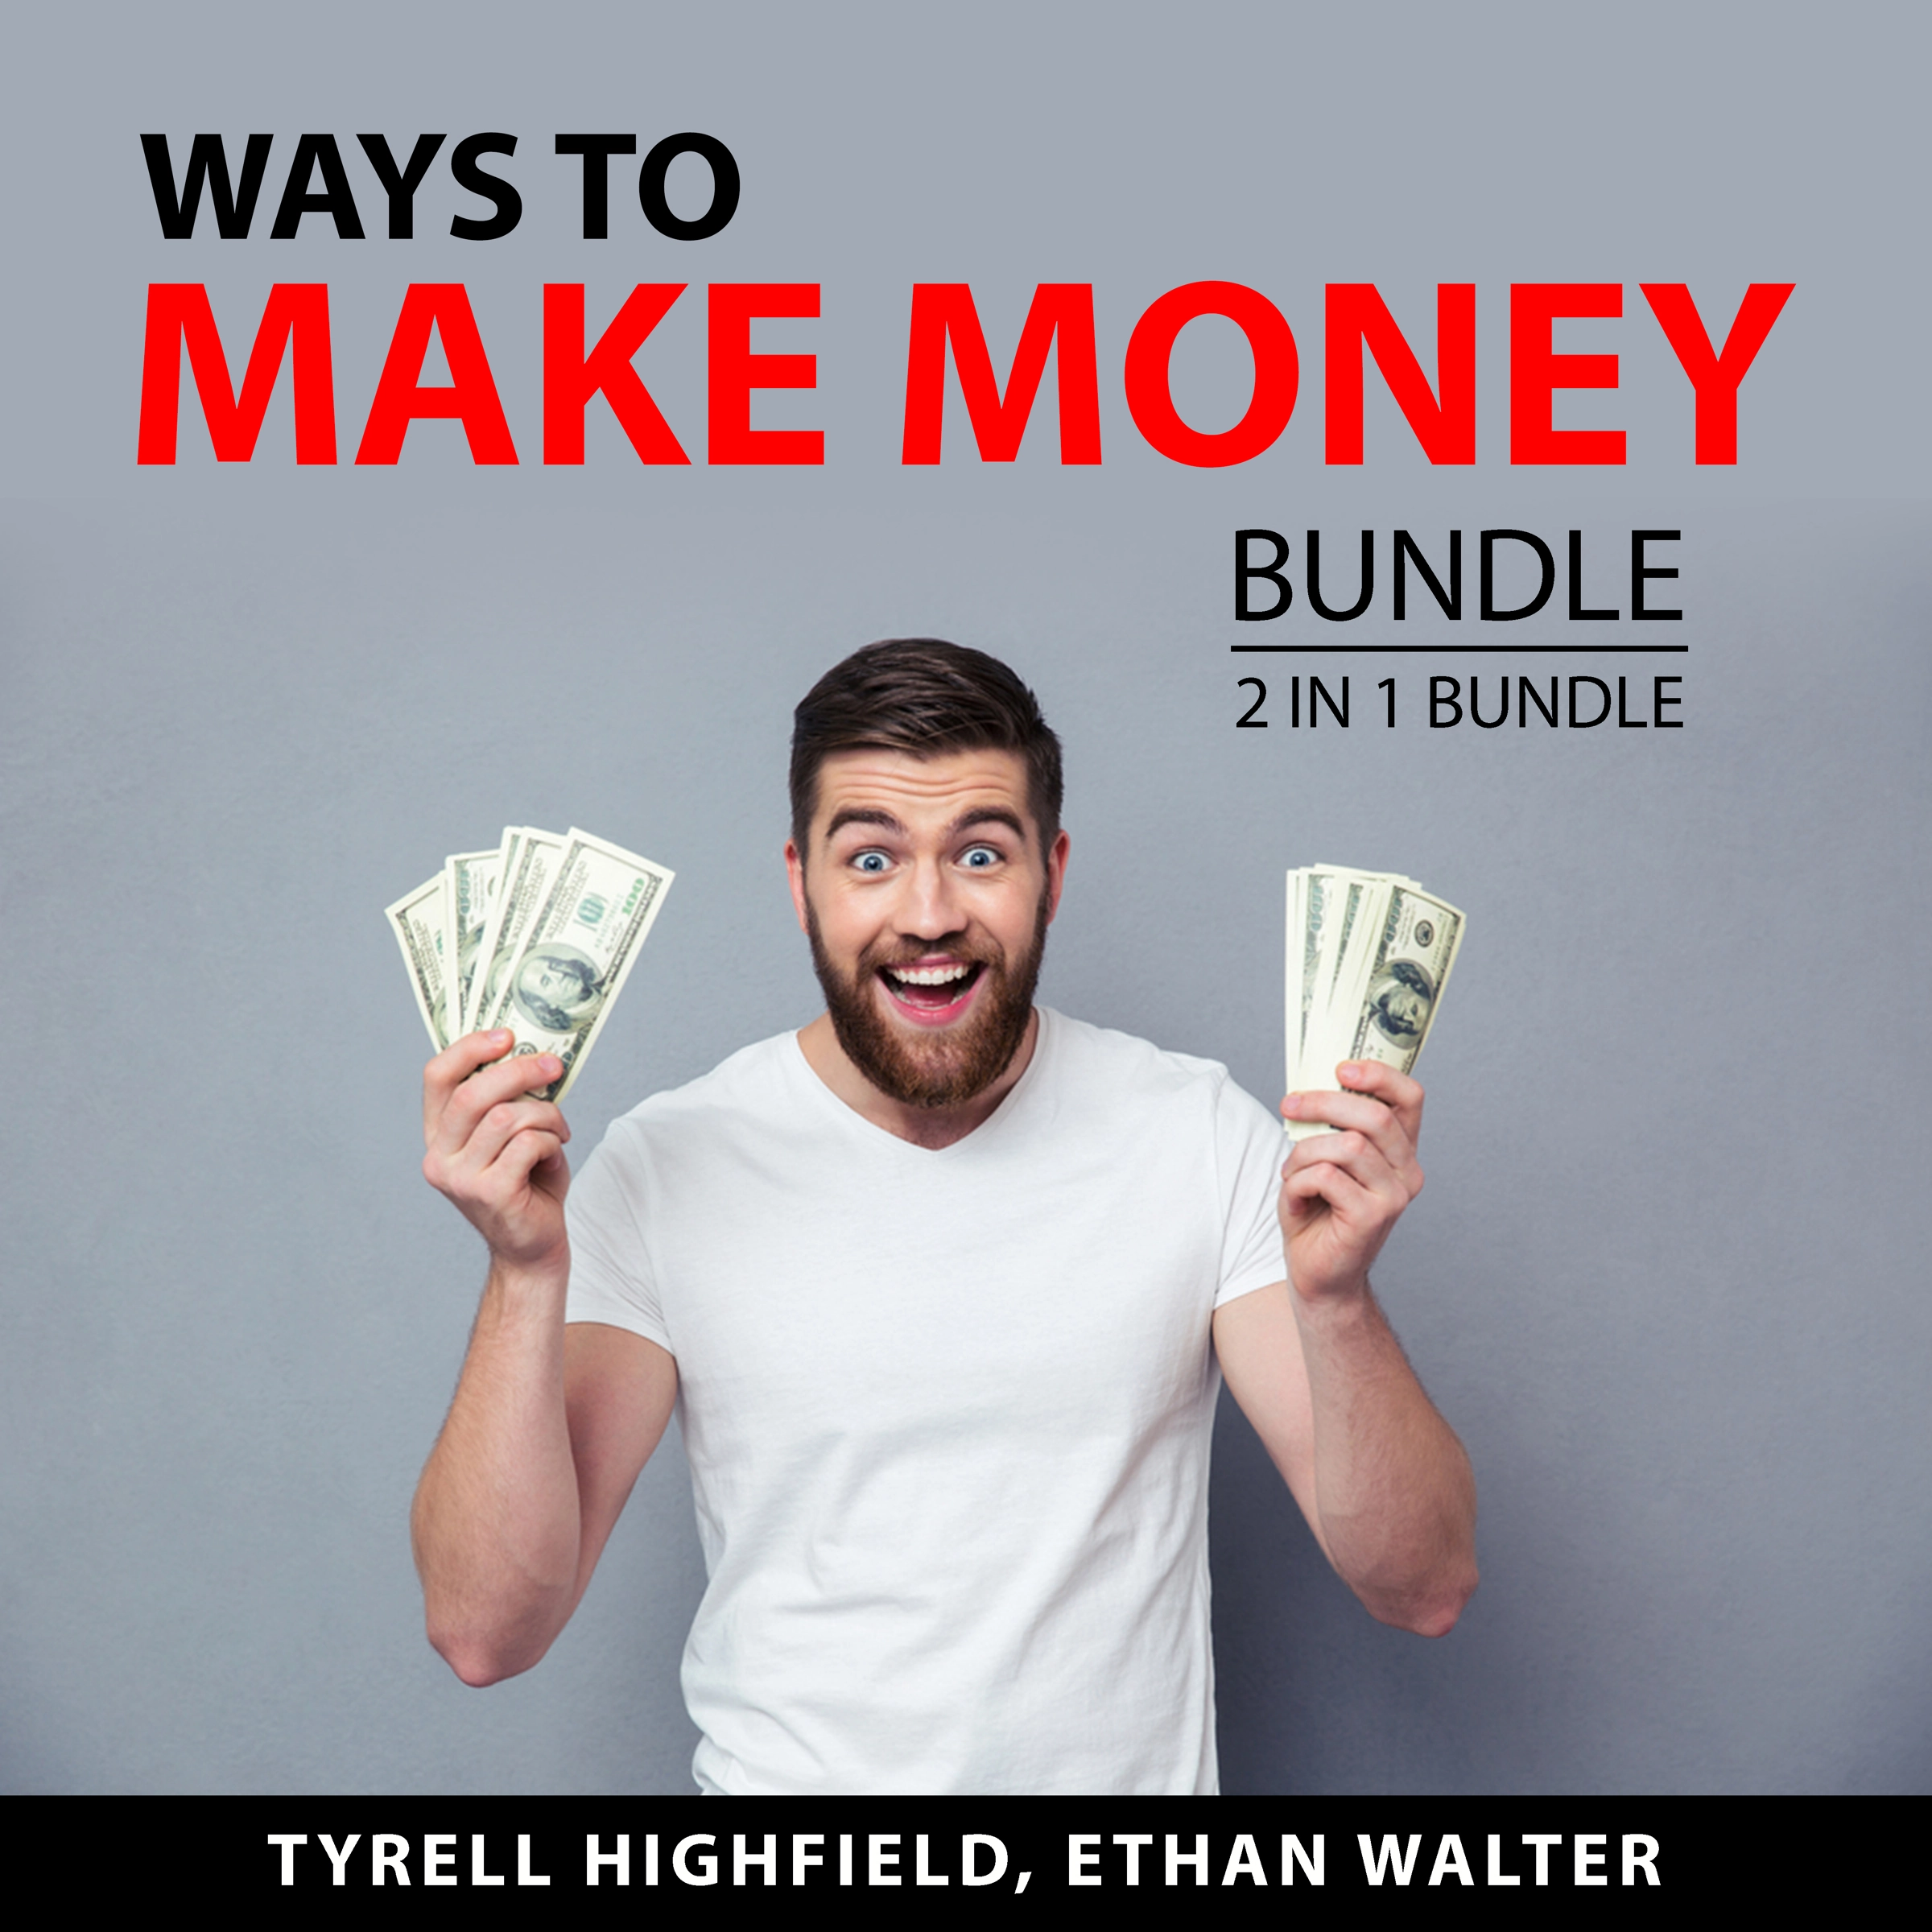 Ways to Make Money Bundle, 2 in 1 Bundle Audiobook by Ethan Walter